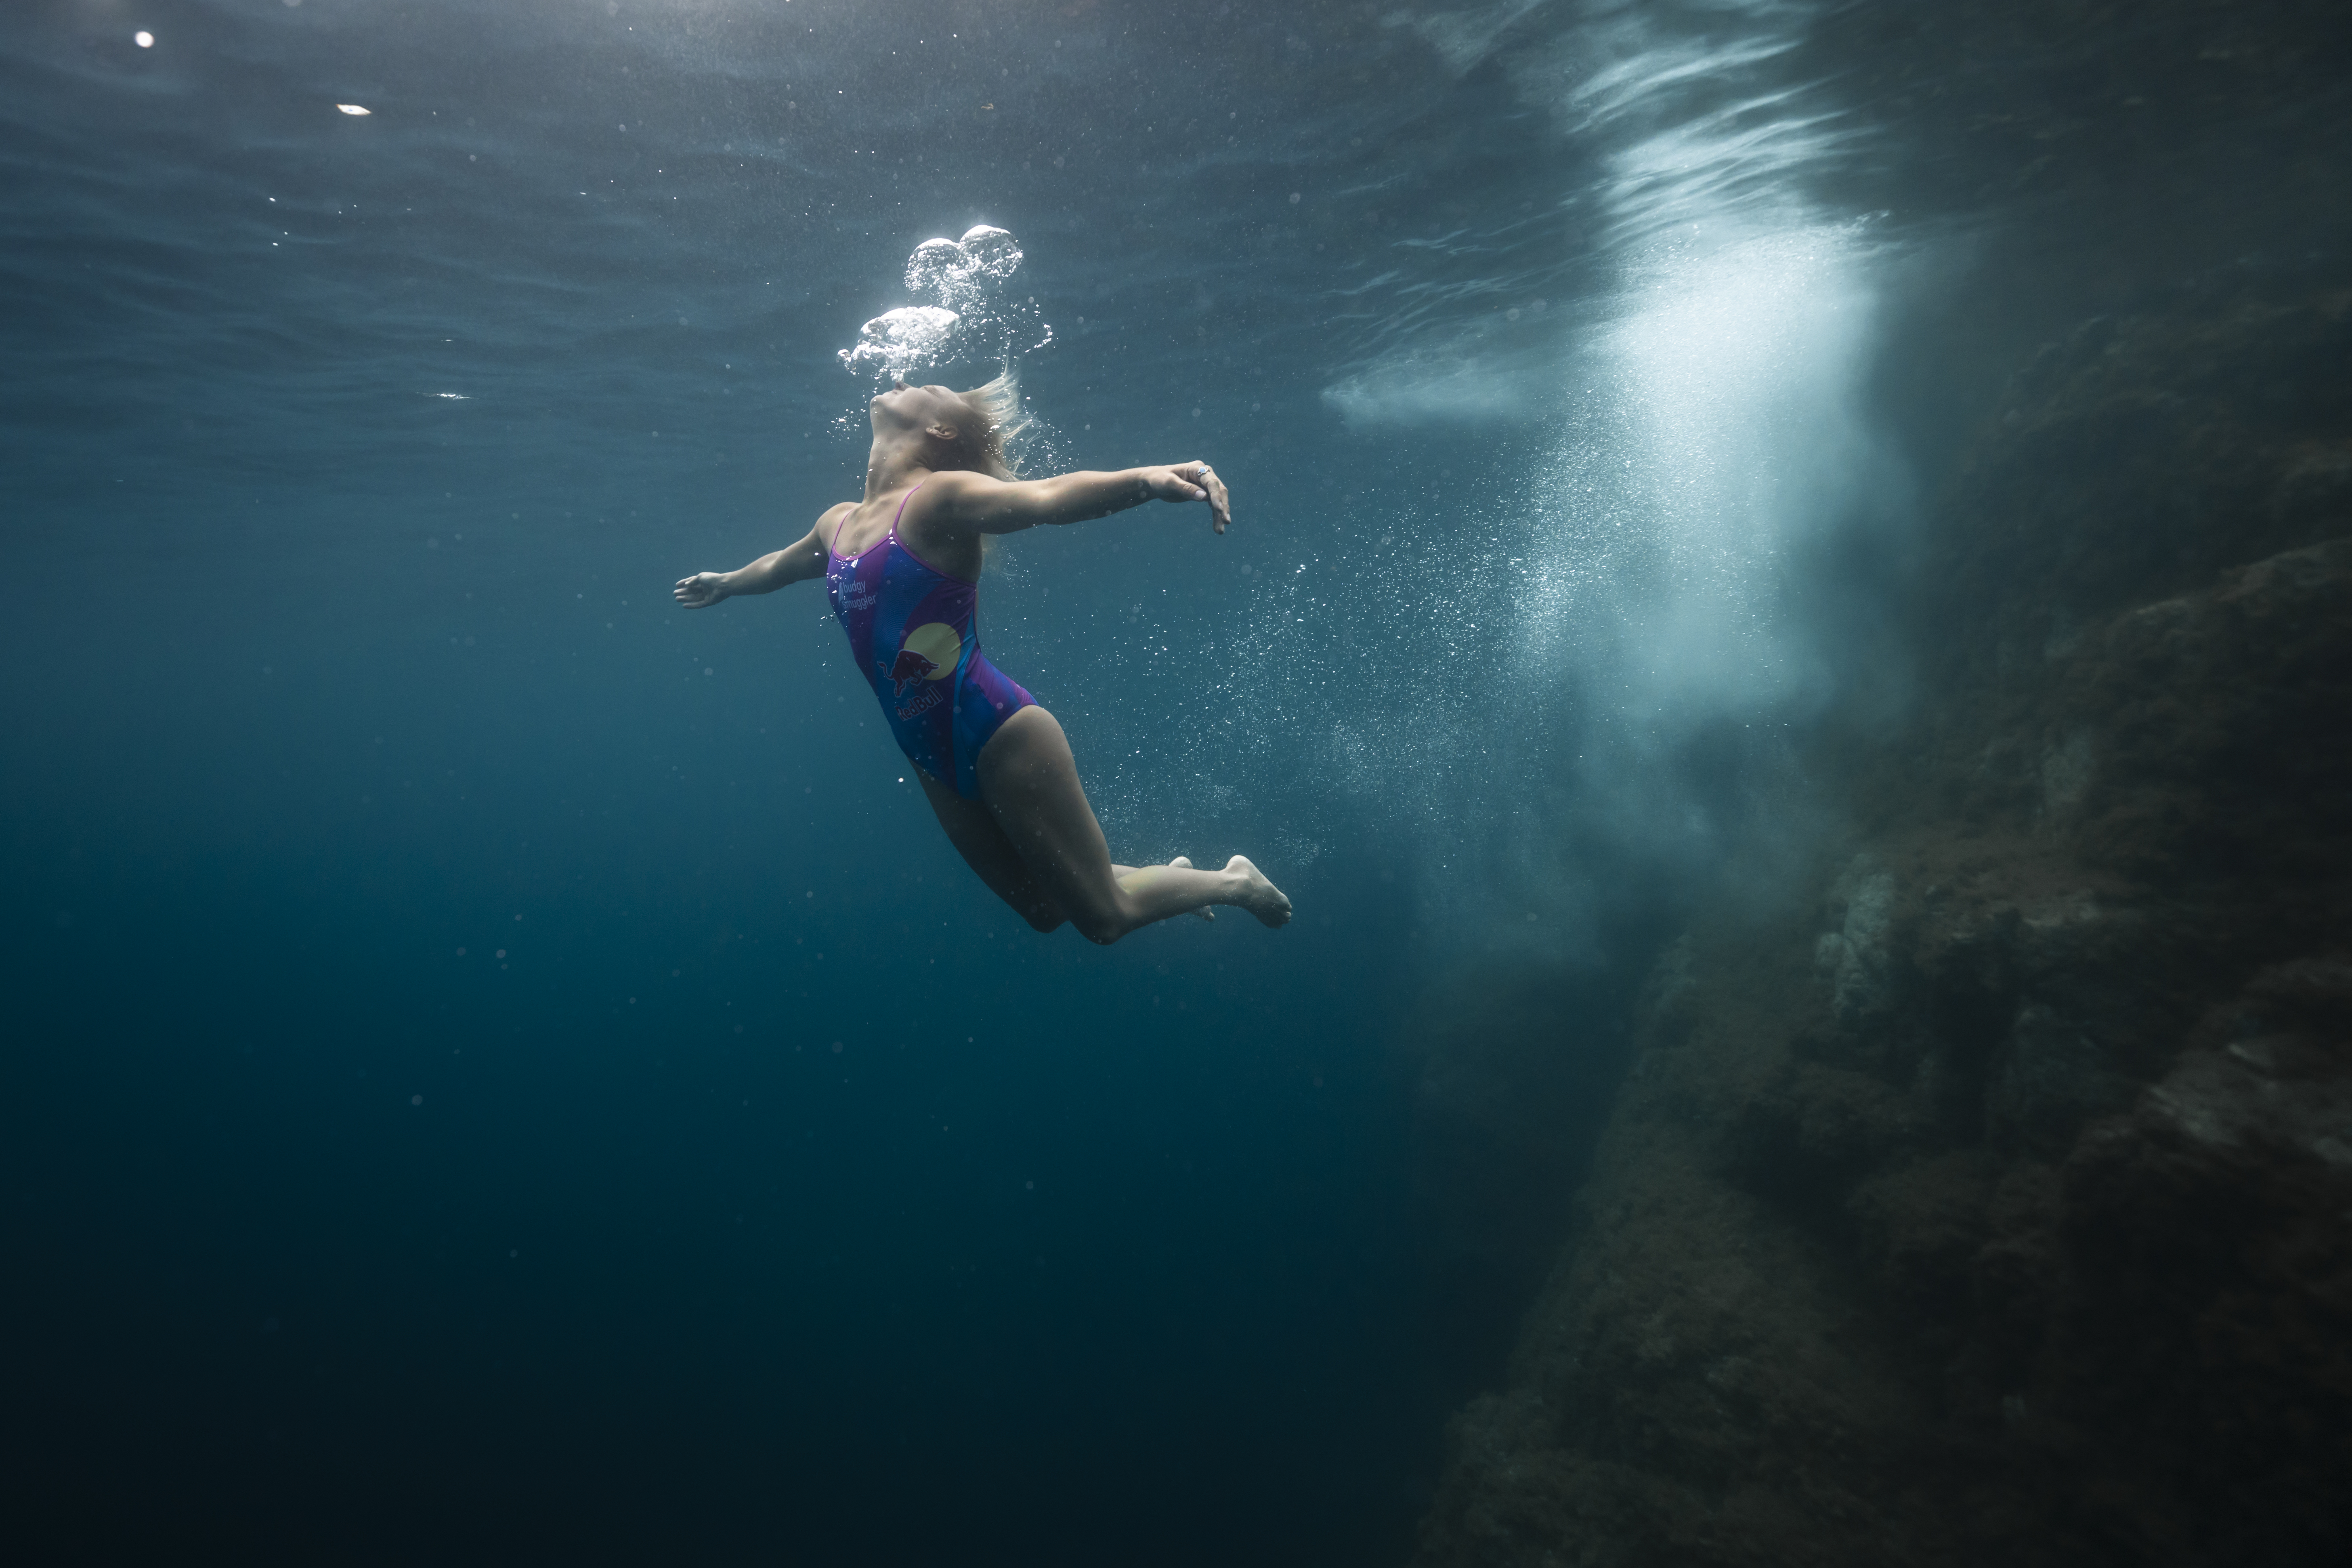 Rhiannan Iffland underwater shot at Saint-Raphael by Alex Voyer - Red Bull Cliff Diving 2021 - Lineupping.com